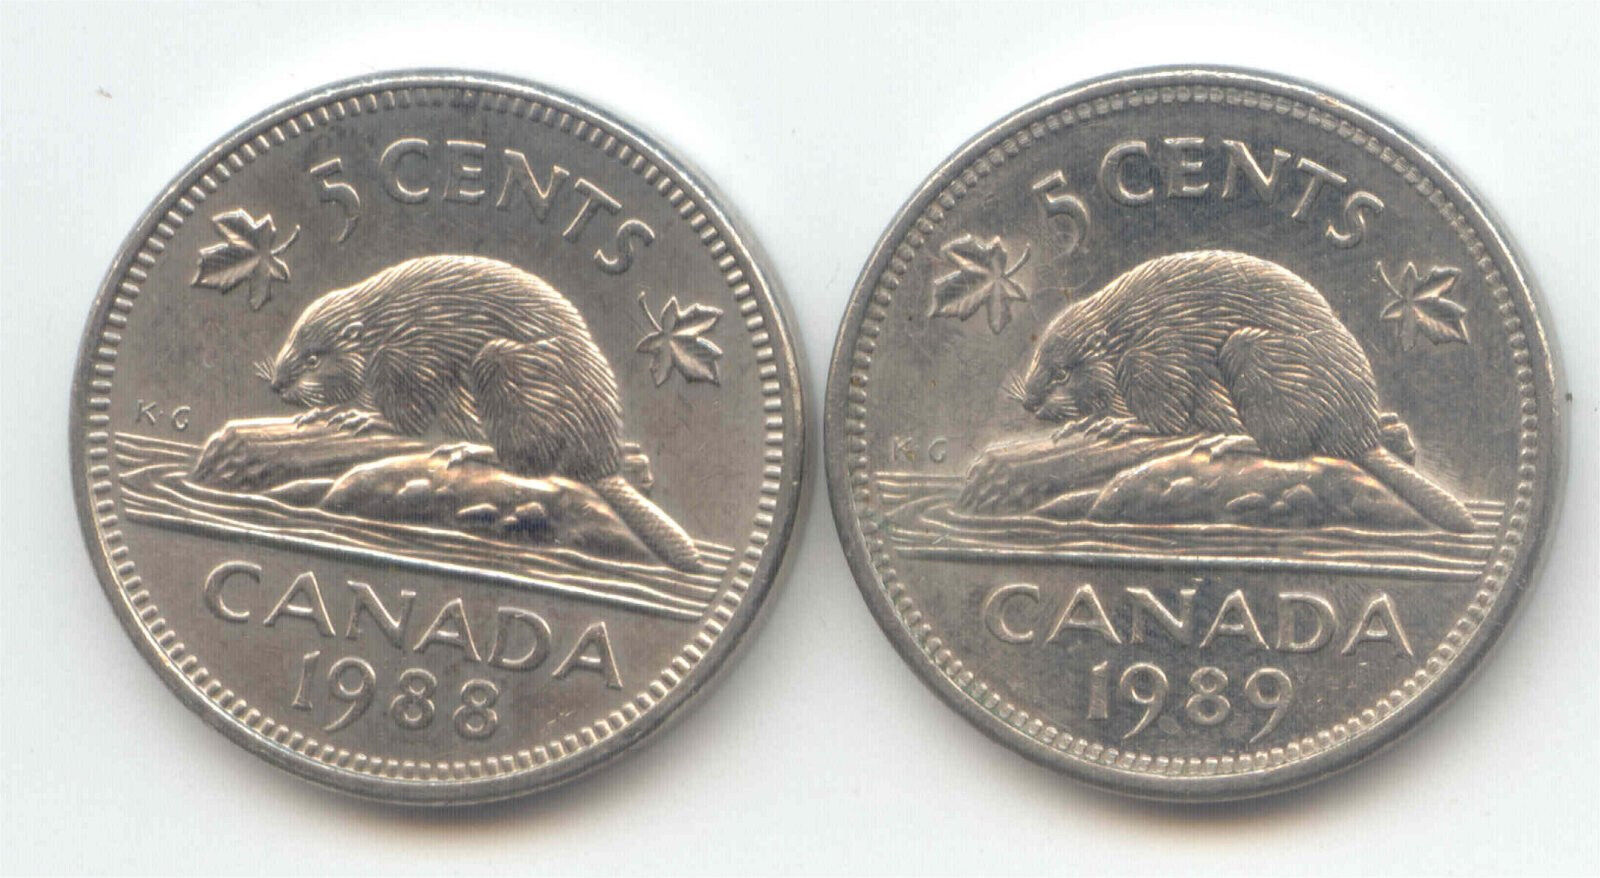 Canada 1988 1989 Canadian Nickels Beaver Nickel ~ Exact 2 Coin Set